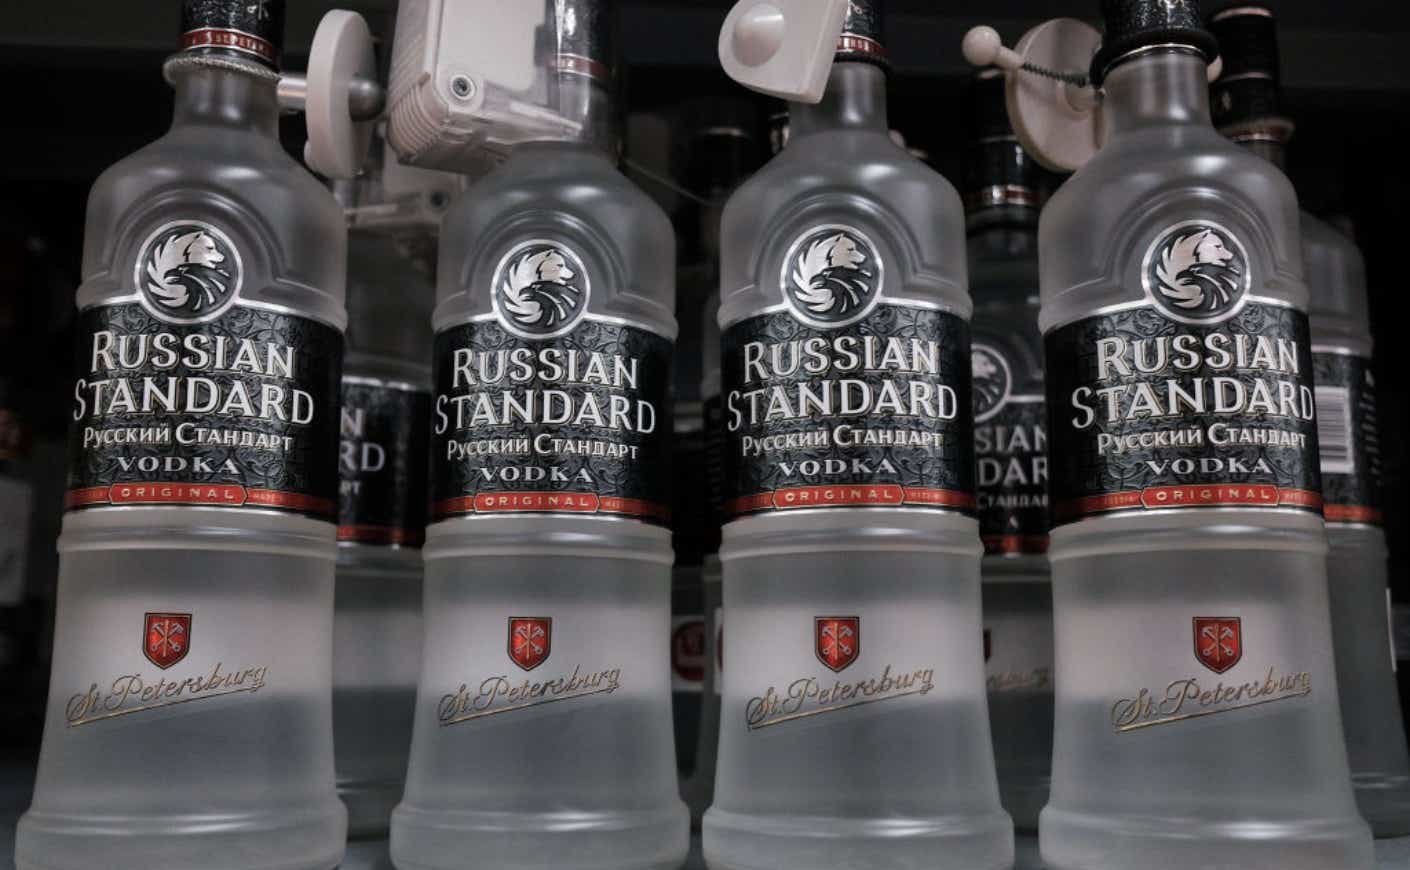 Russian Standard vodka bottles